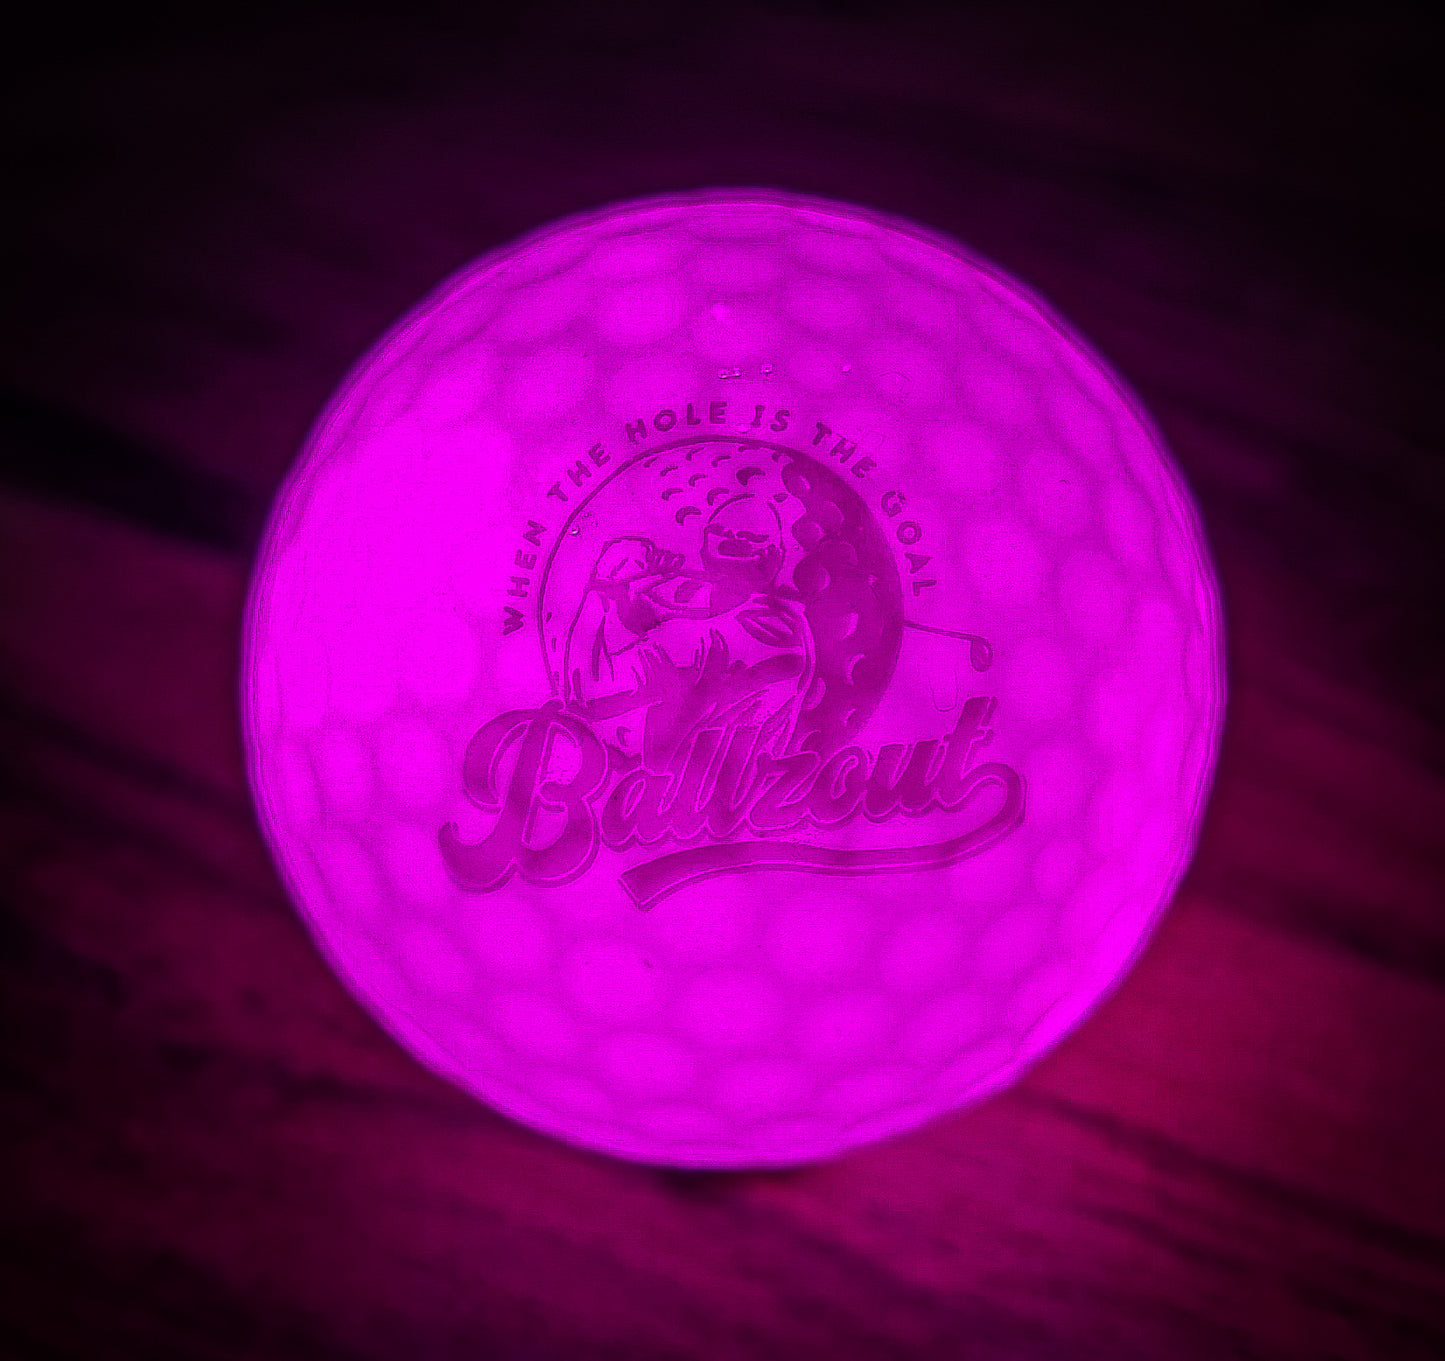 LED LIGHT UP NIGHT GOLF BALLS (Colour: ORANGE - 6 colour range)